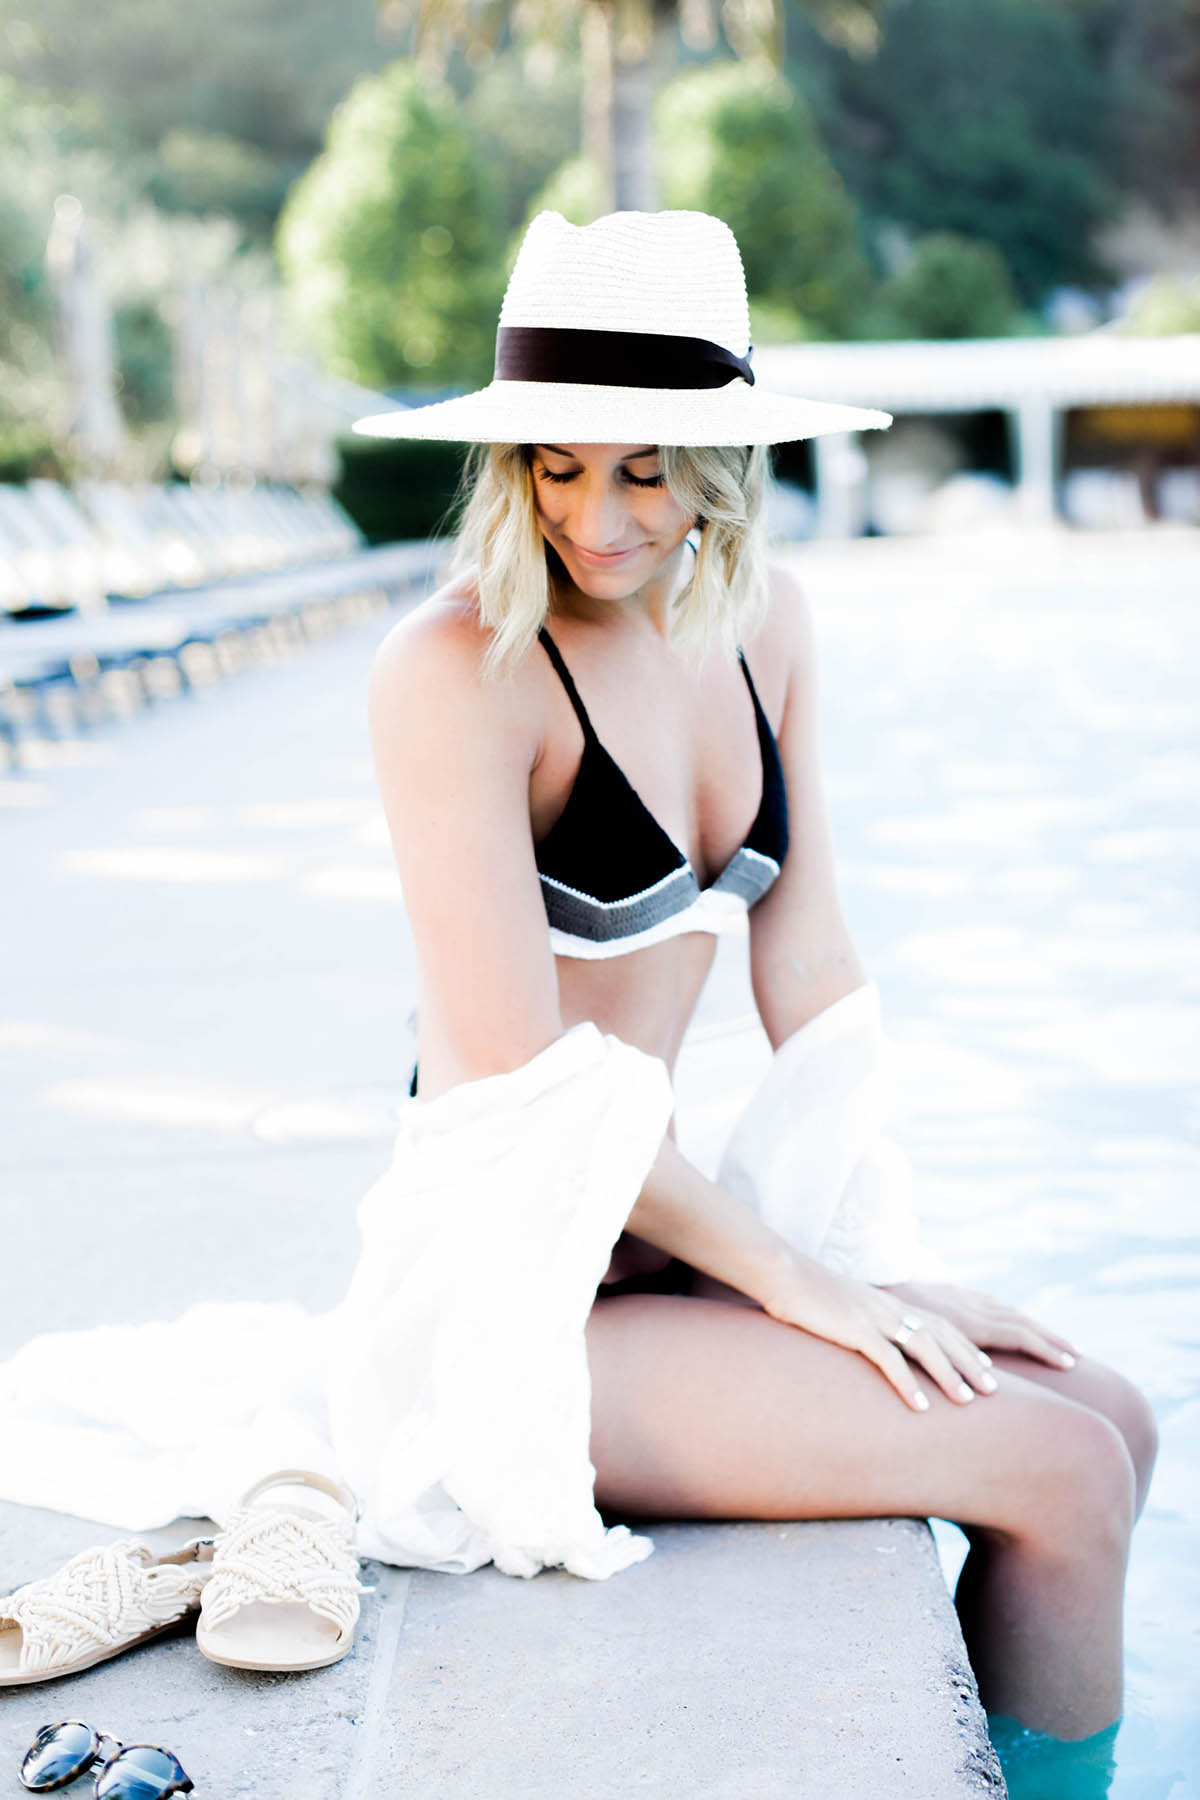 Amanda Holstein's poolside style in Revolve crochet bikini and Urban Outfitters kimono